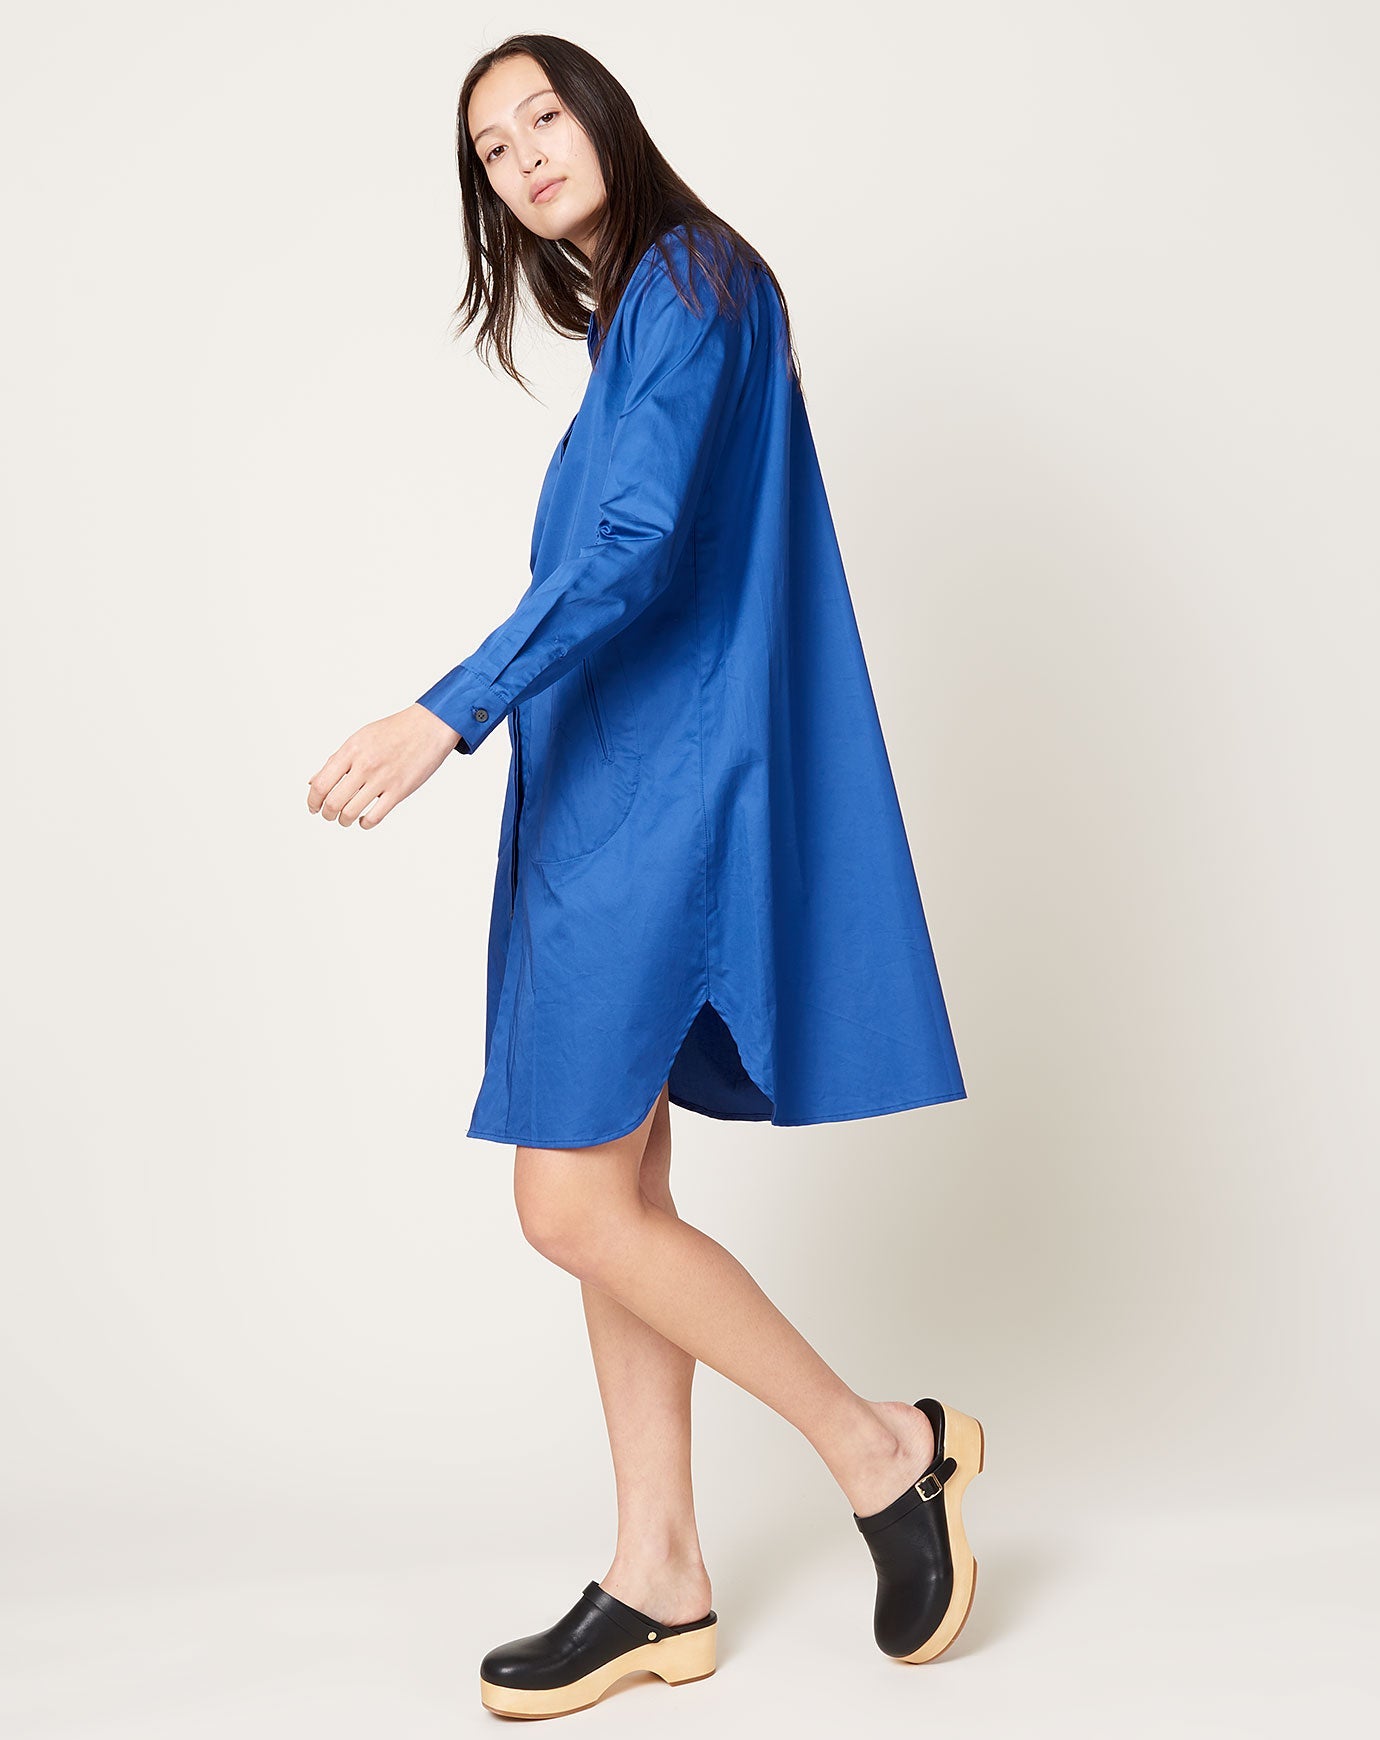 Zero + Maria Cornejo Forward Shirt Dress in Royal Blue